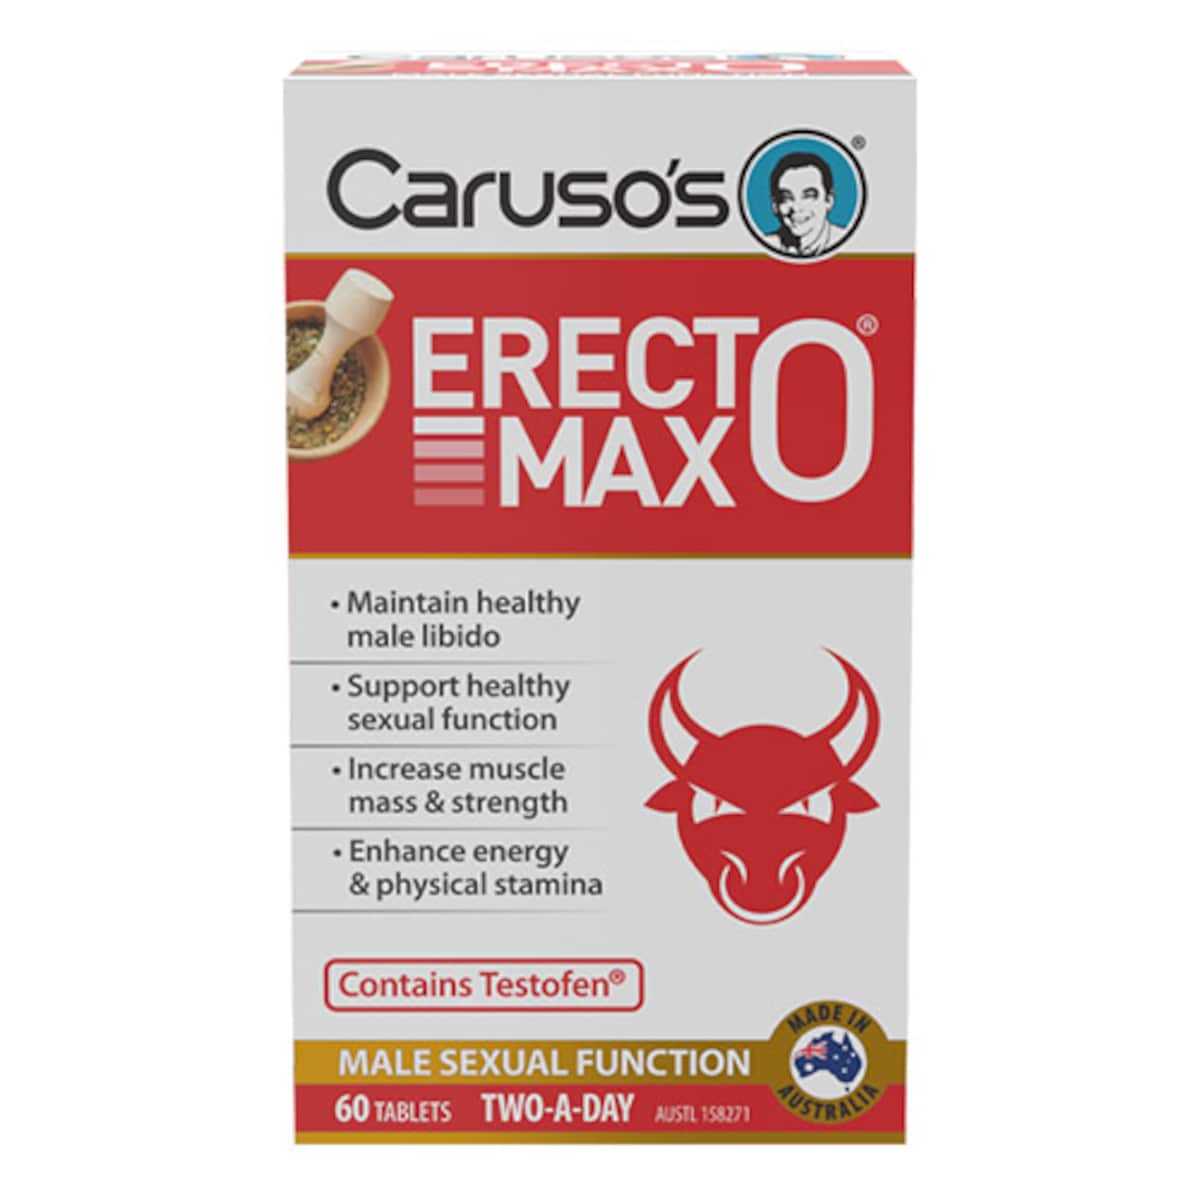 Carusos ErectoMax 60 Tablets